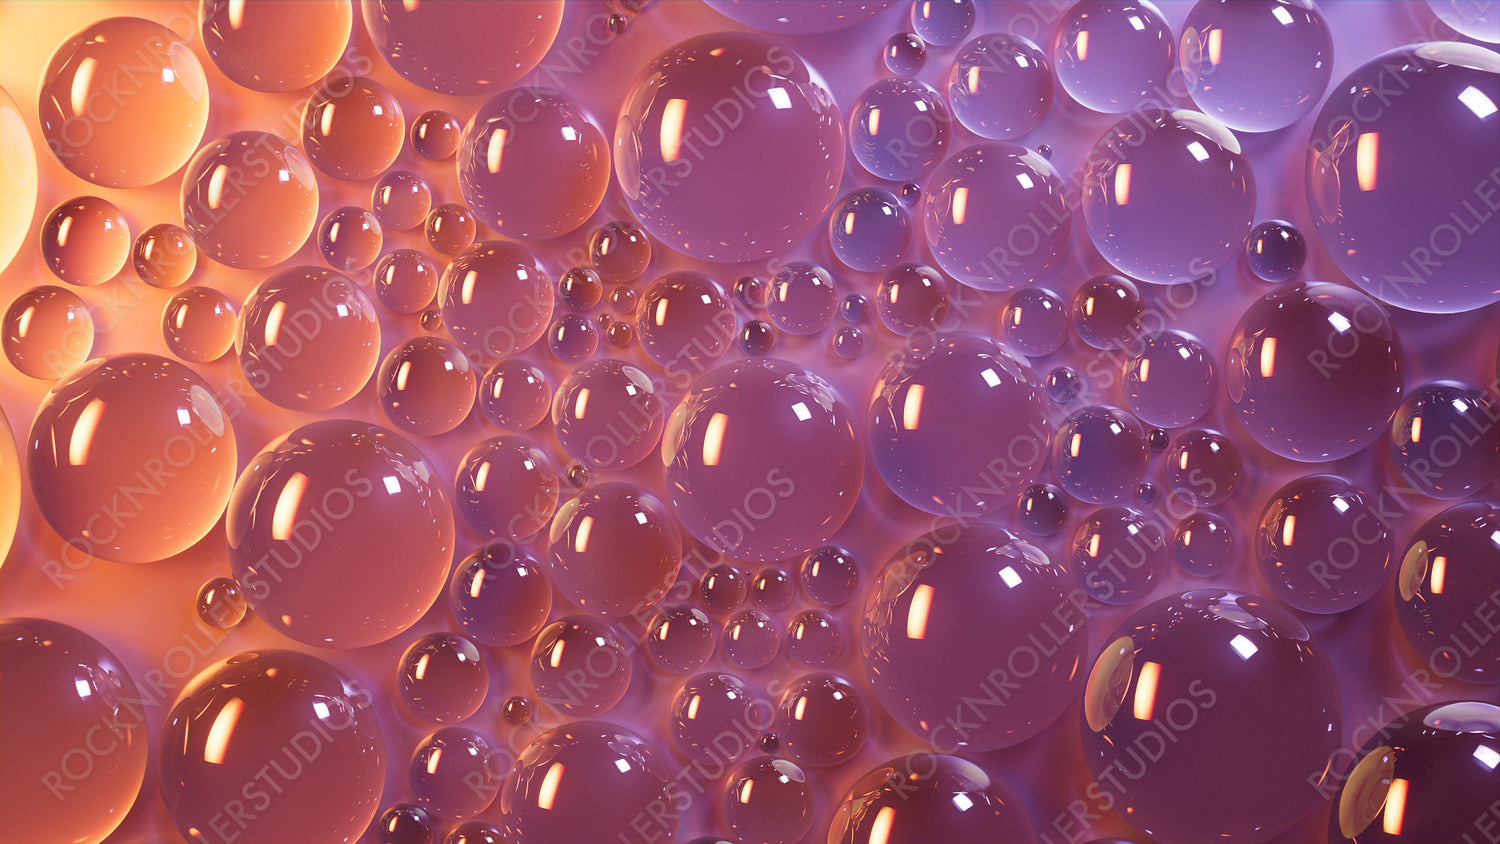 Orange and Pink Dew Drops Background.